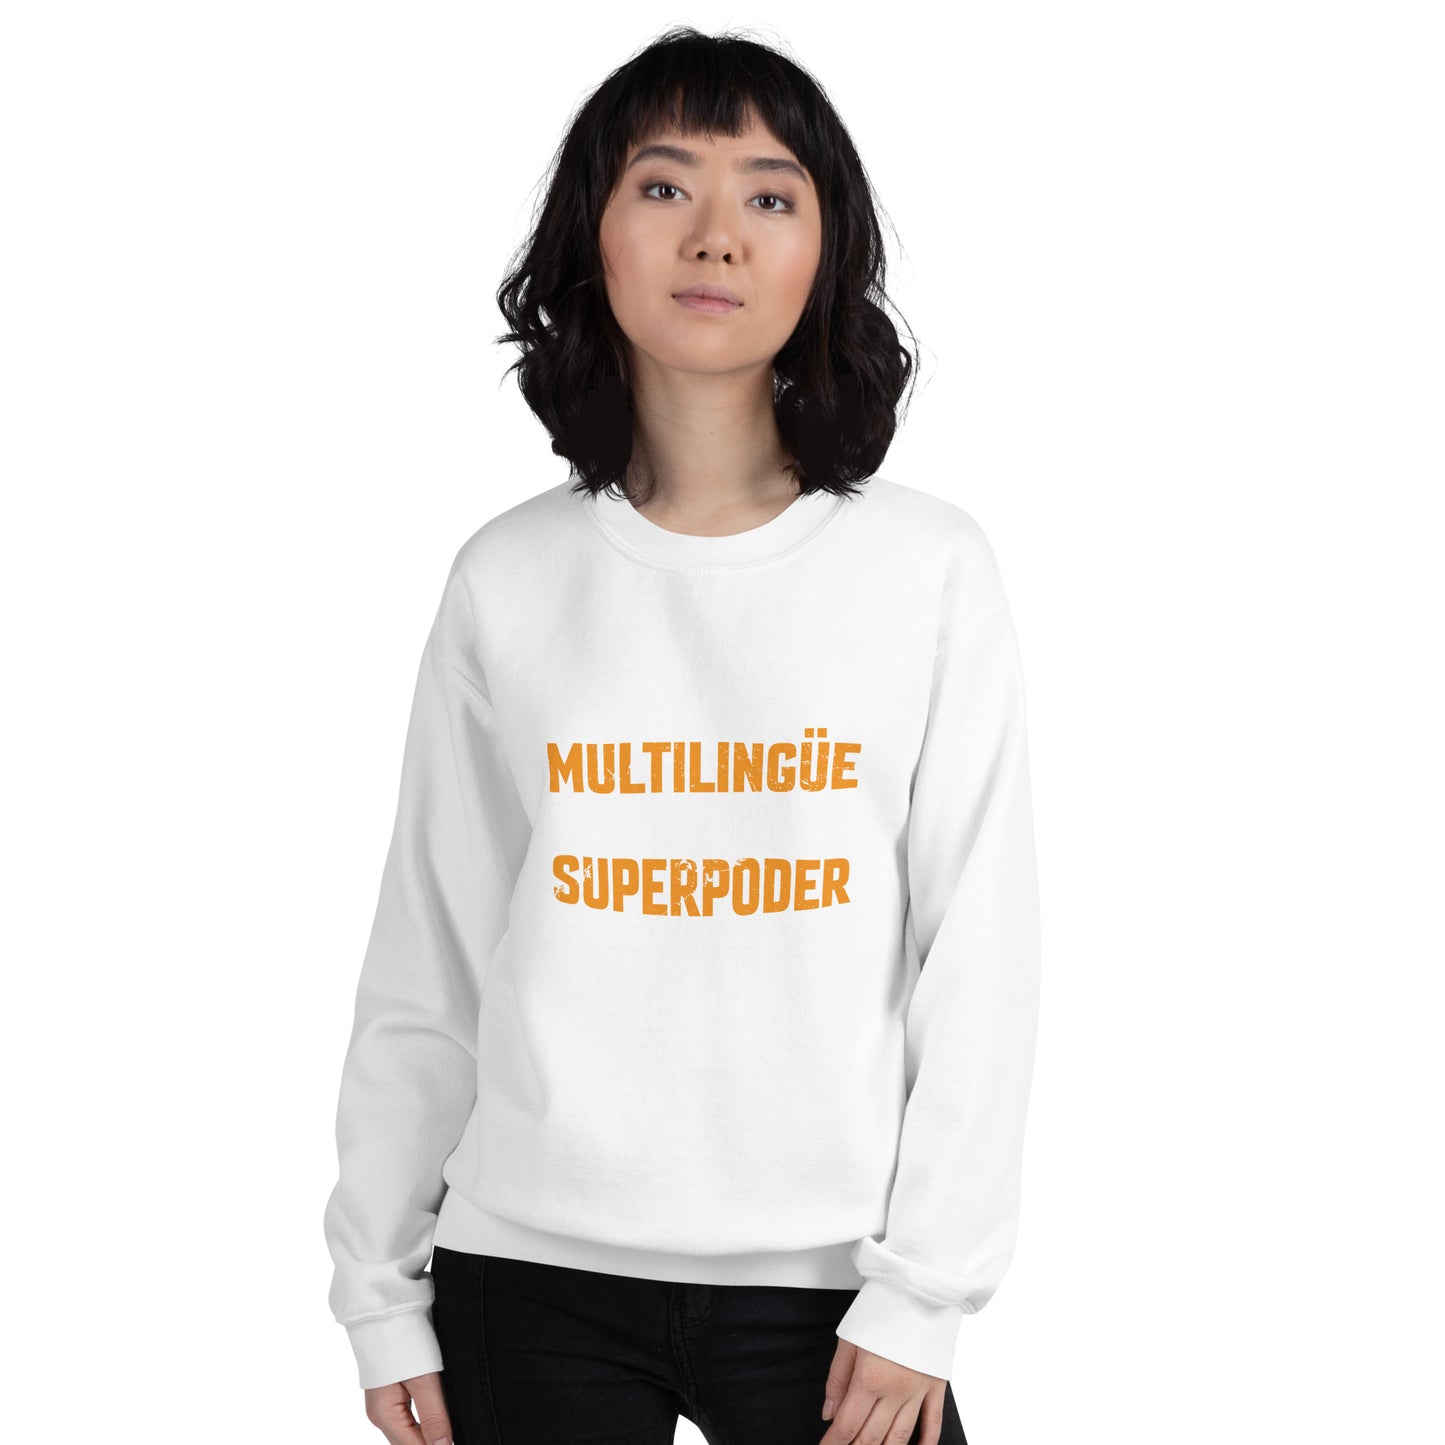 Being Multilingual is my Superpower Sweatshirt (Spanish)